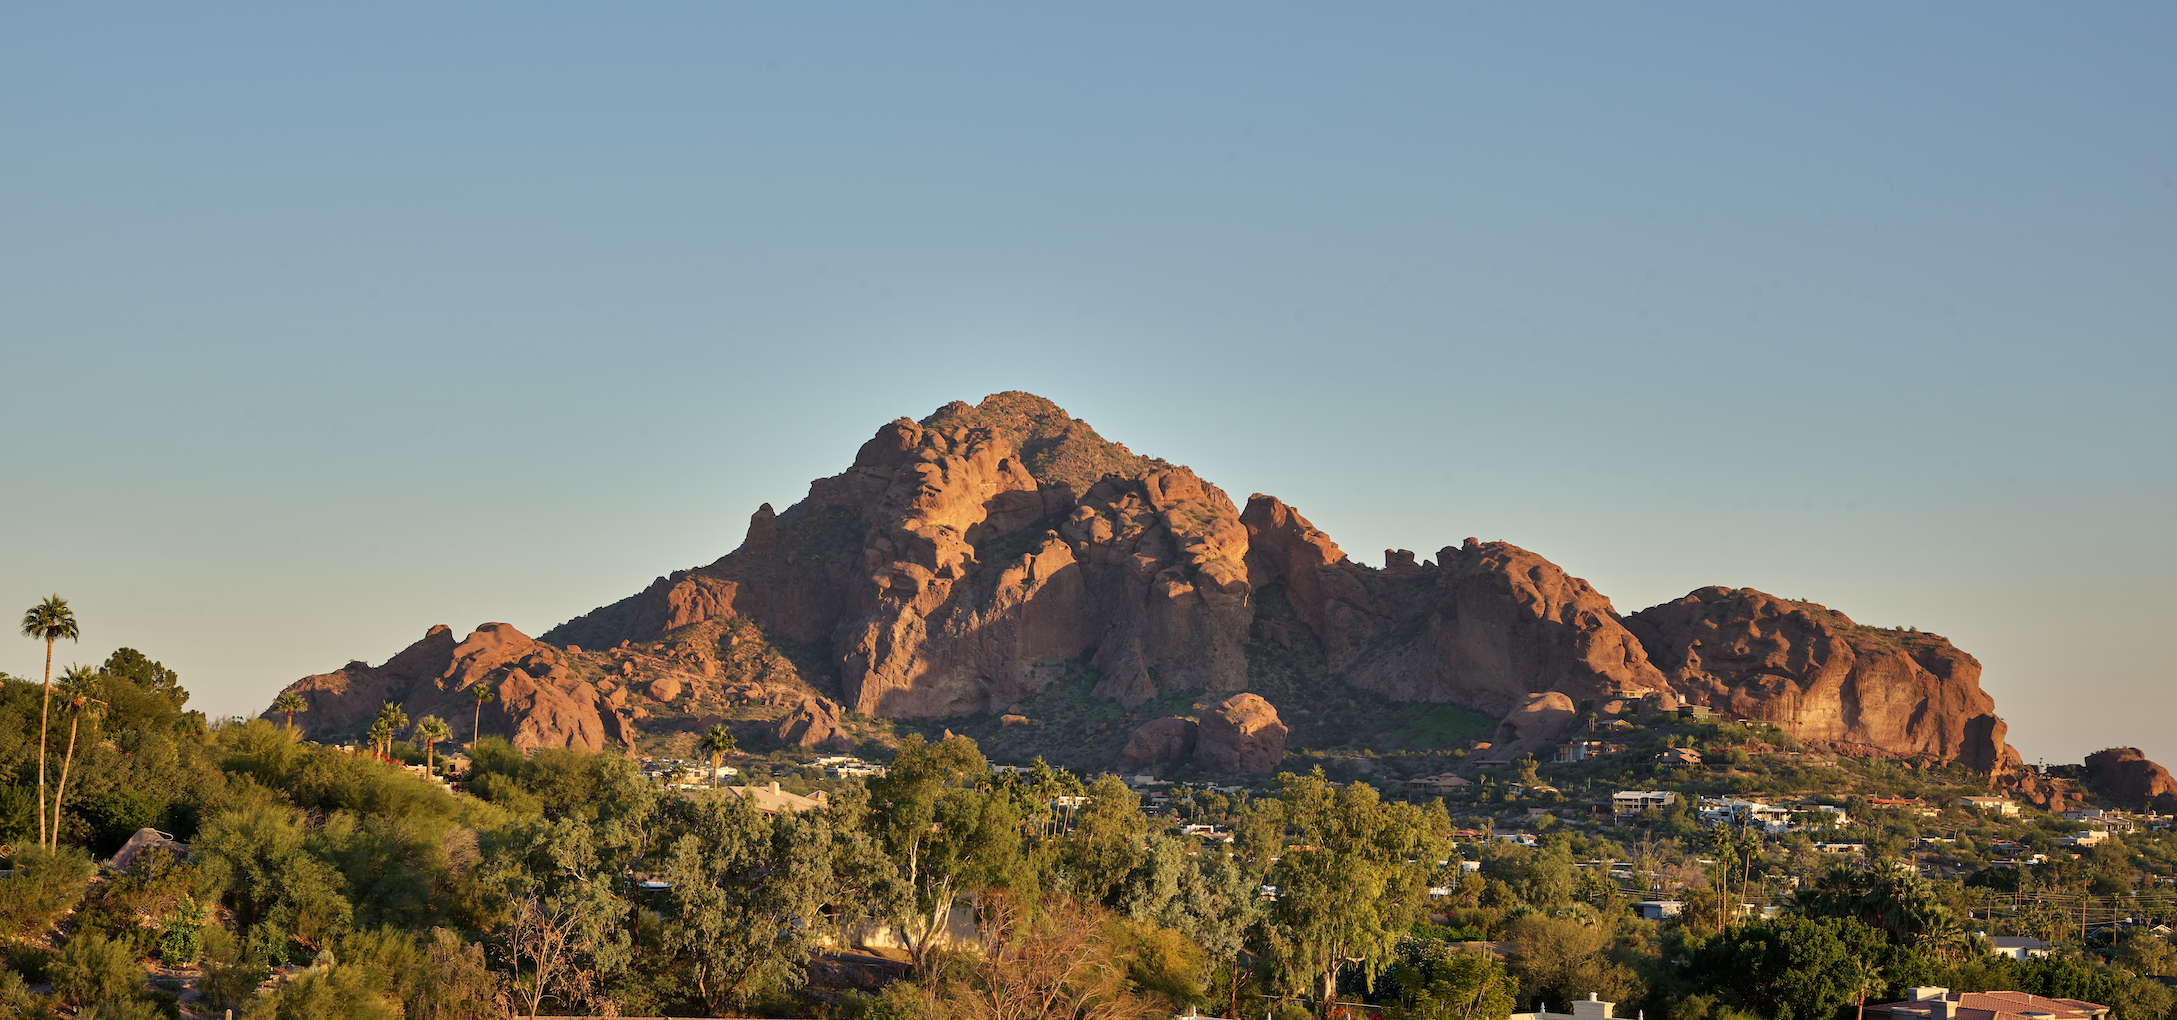 Photo of Camelback Mountain near Scottsdale Arizona